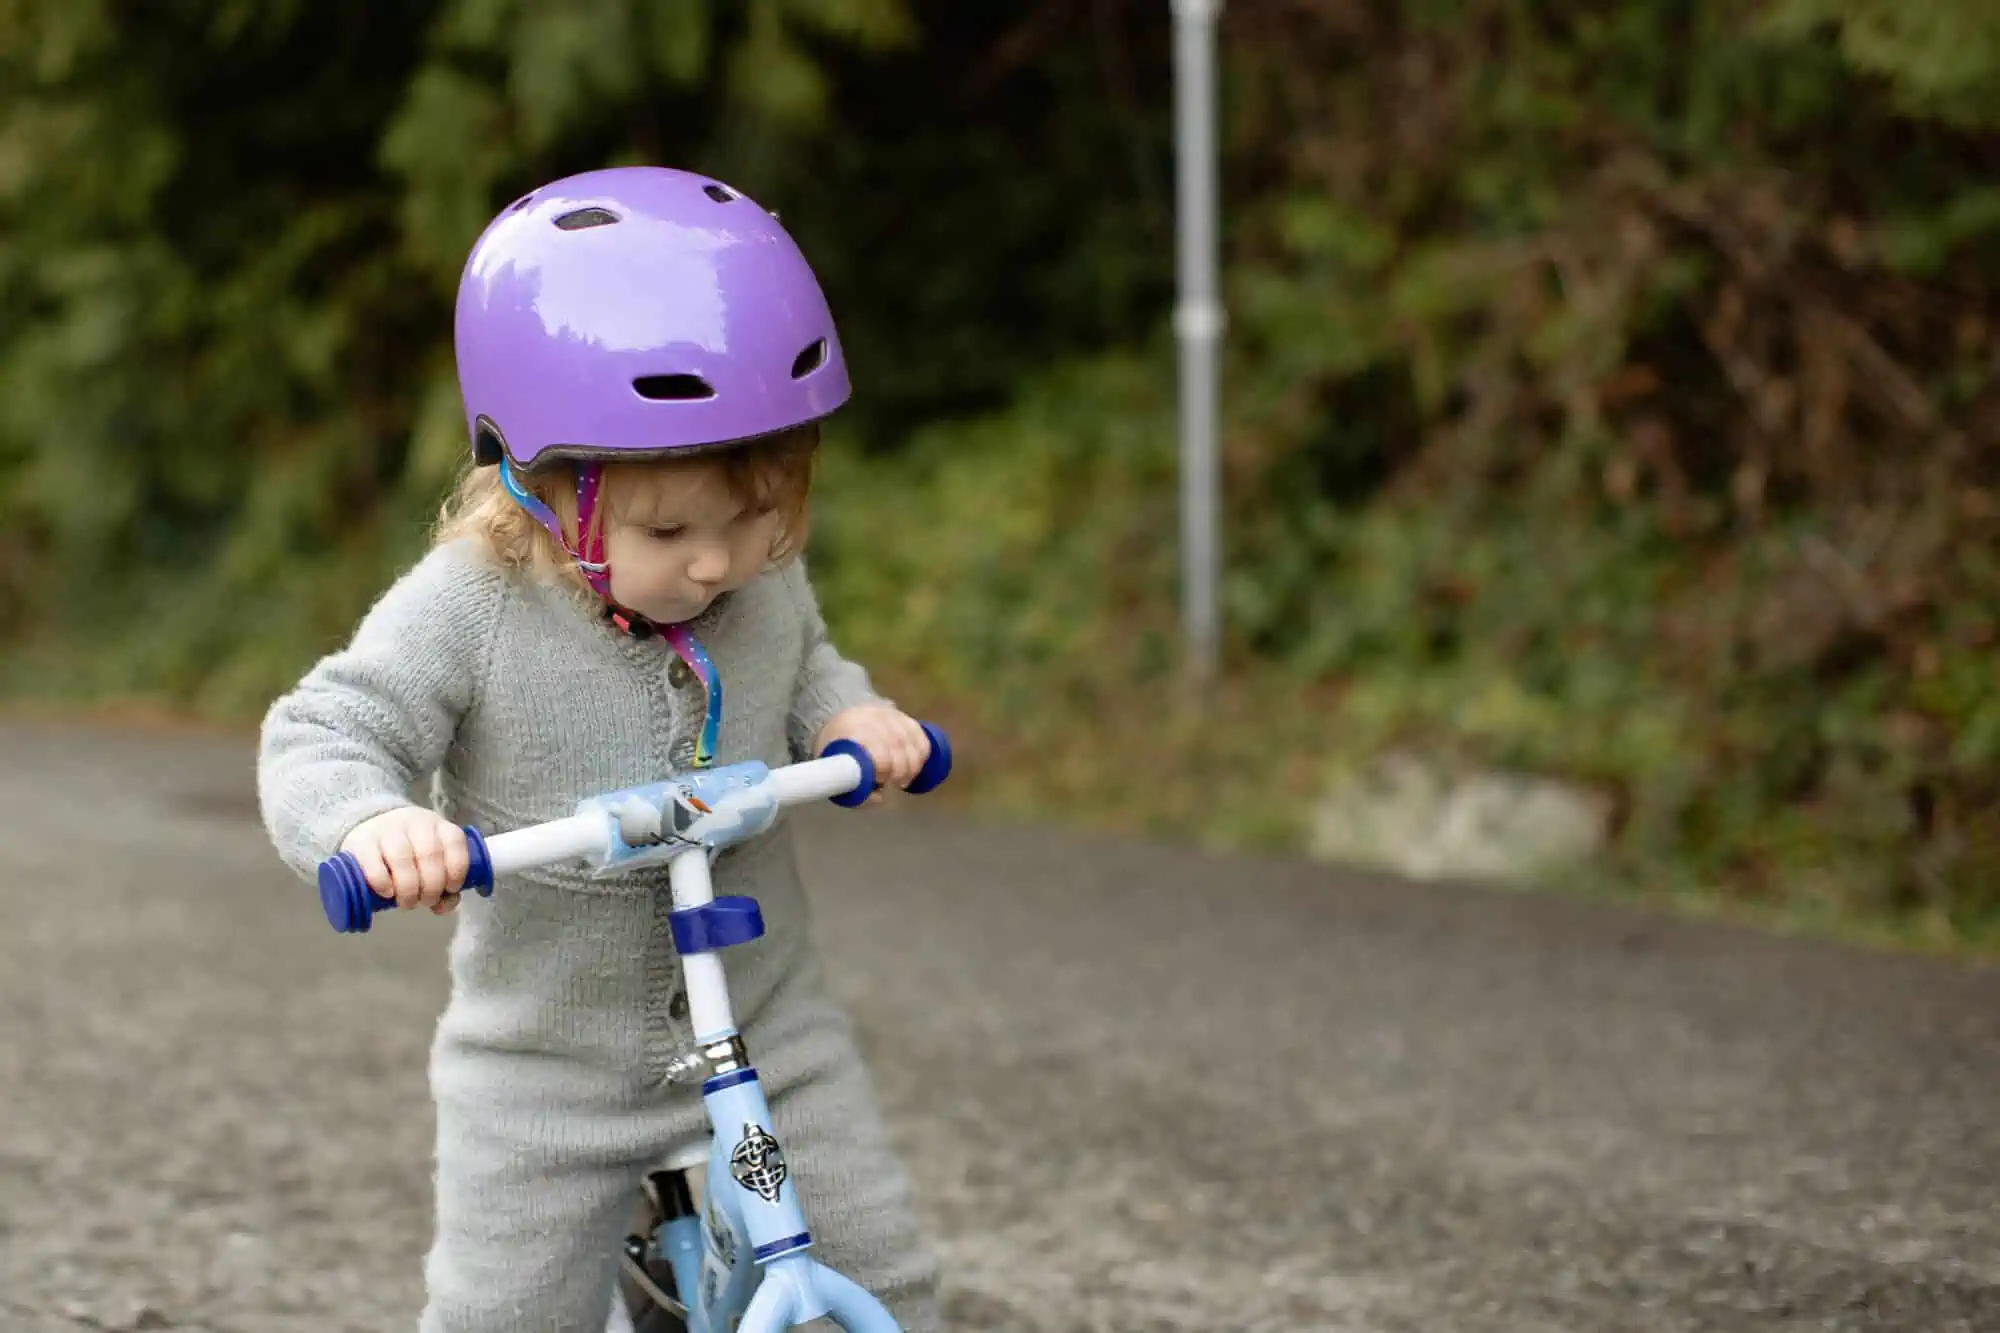 How to choose bike helmet for kids